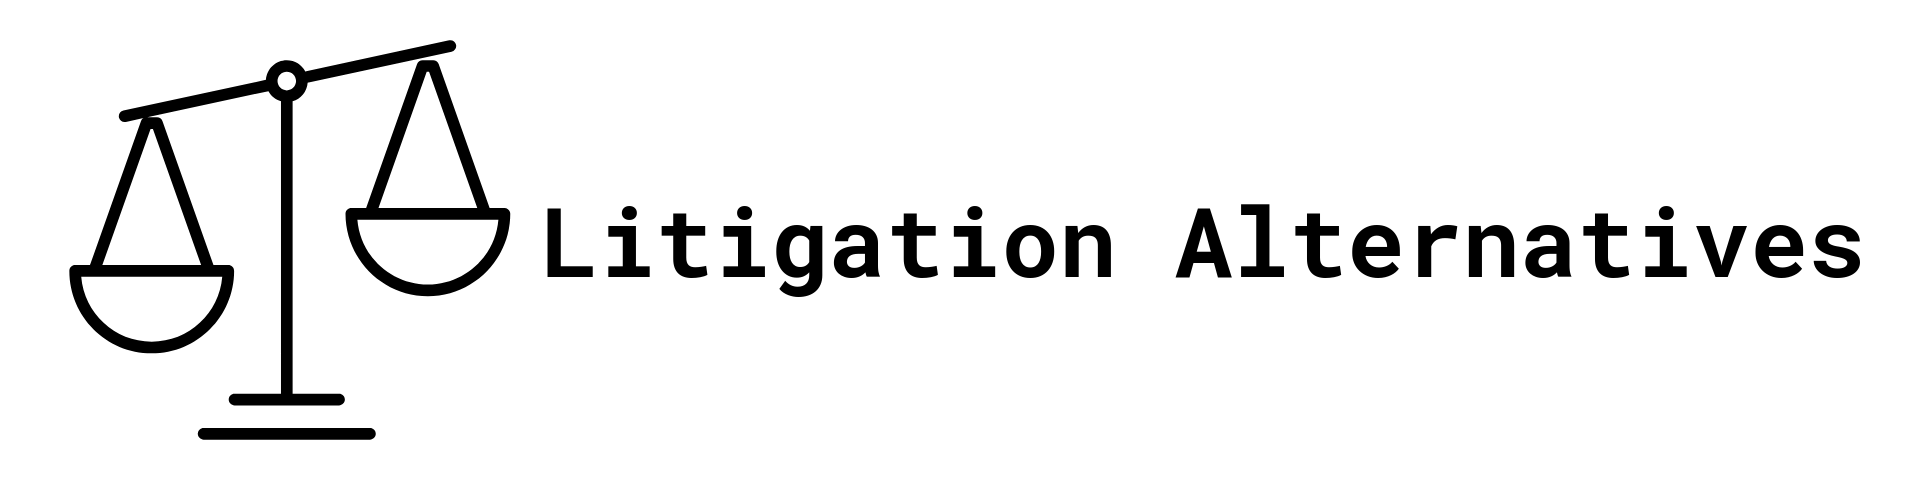 Litigation Alternatives Graphic